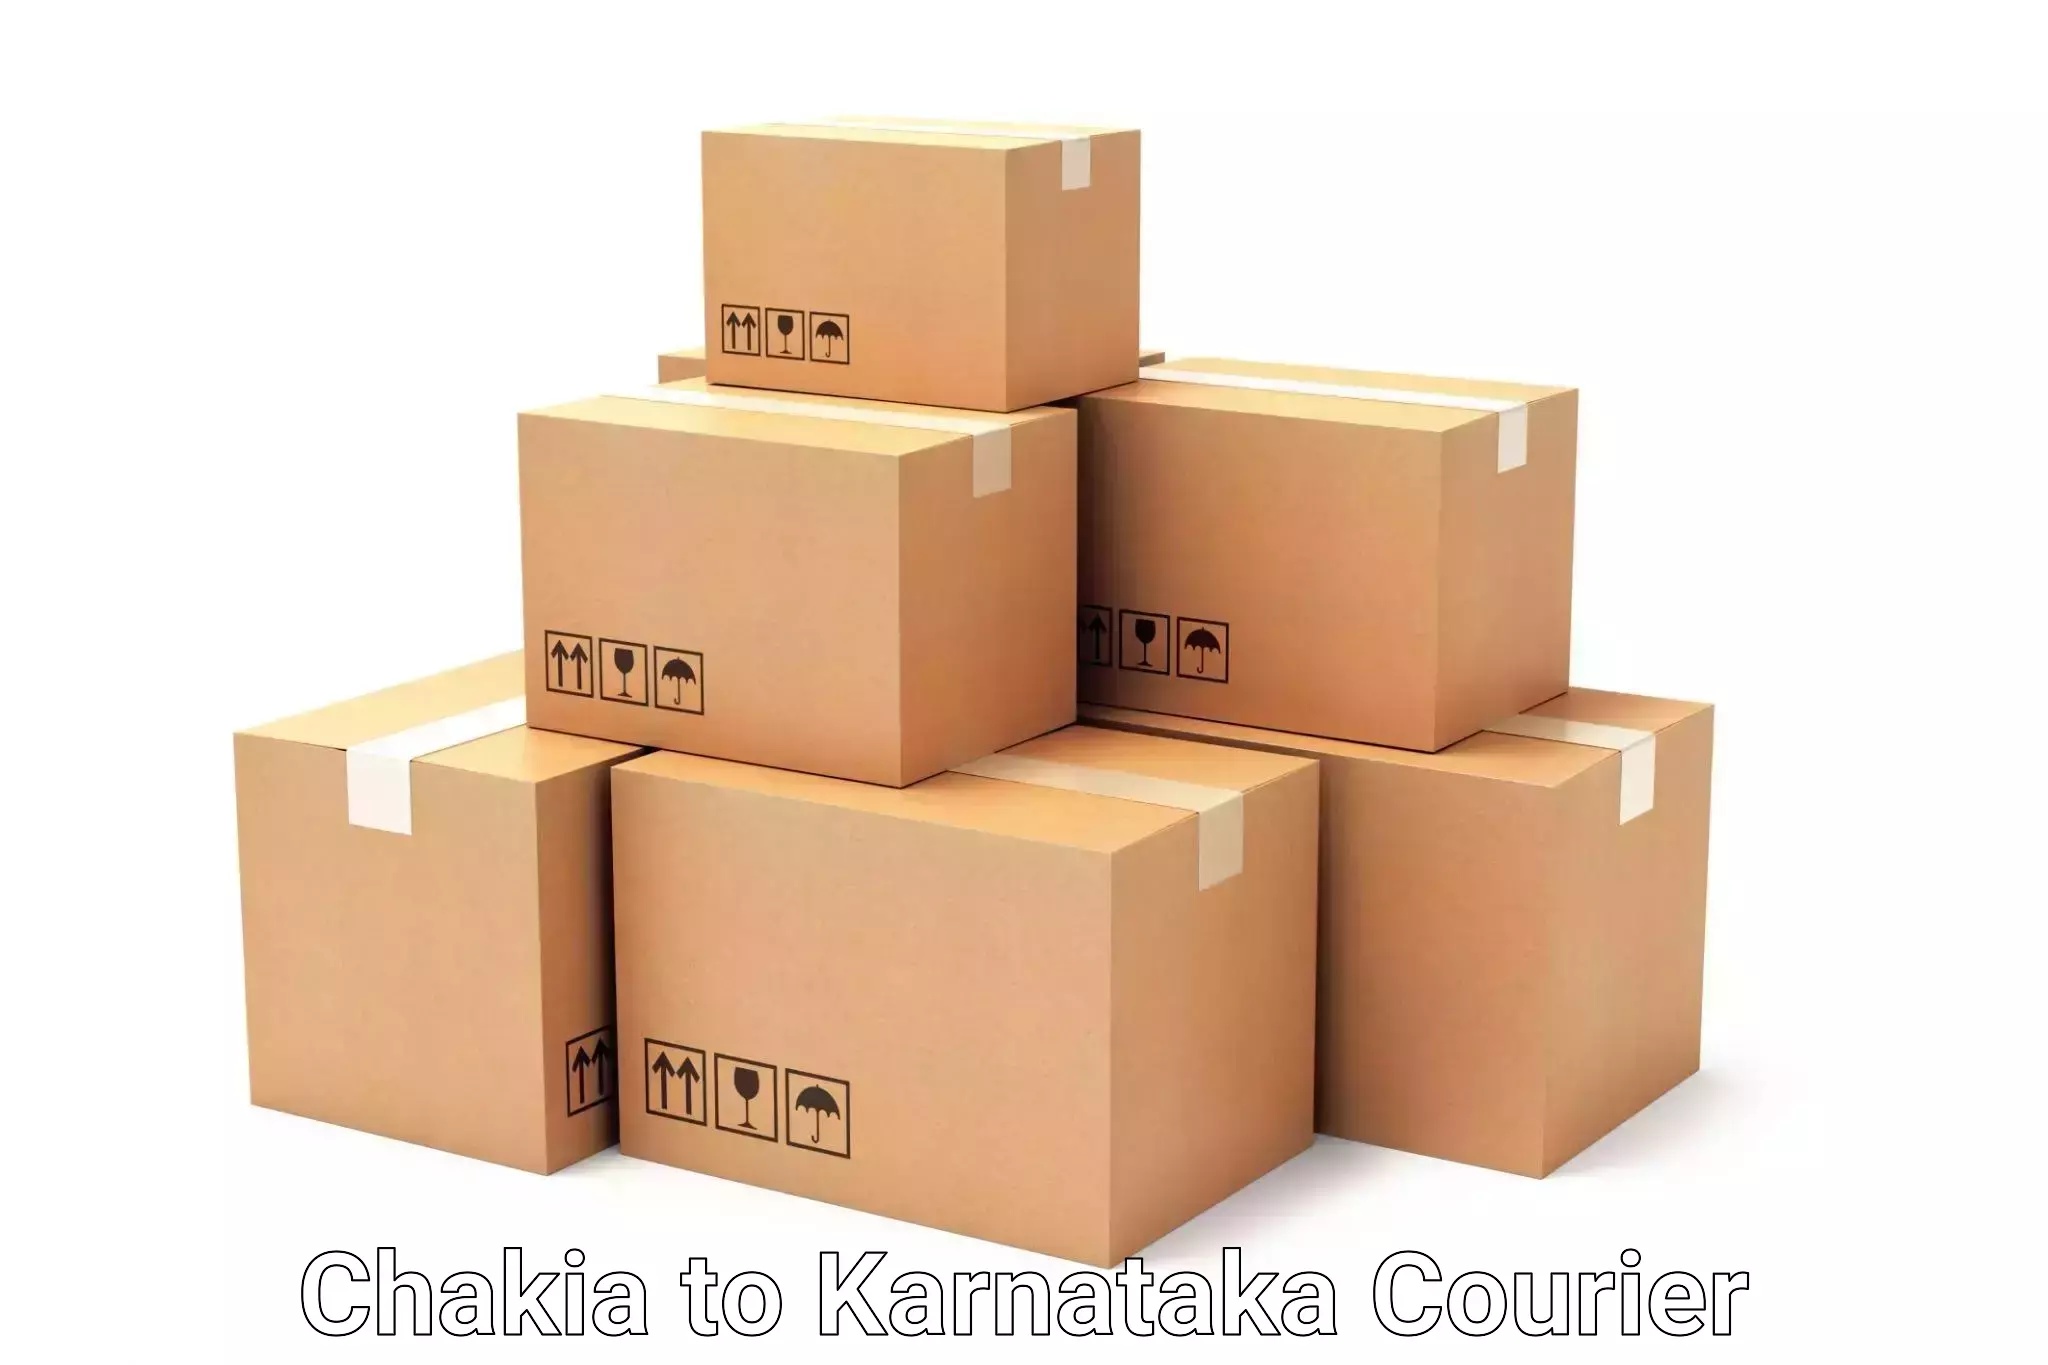 Doorstep luggage collection Chakia to Karnataka